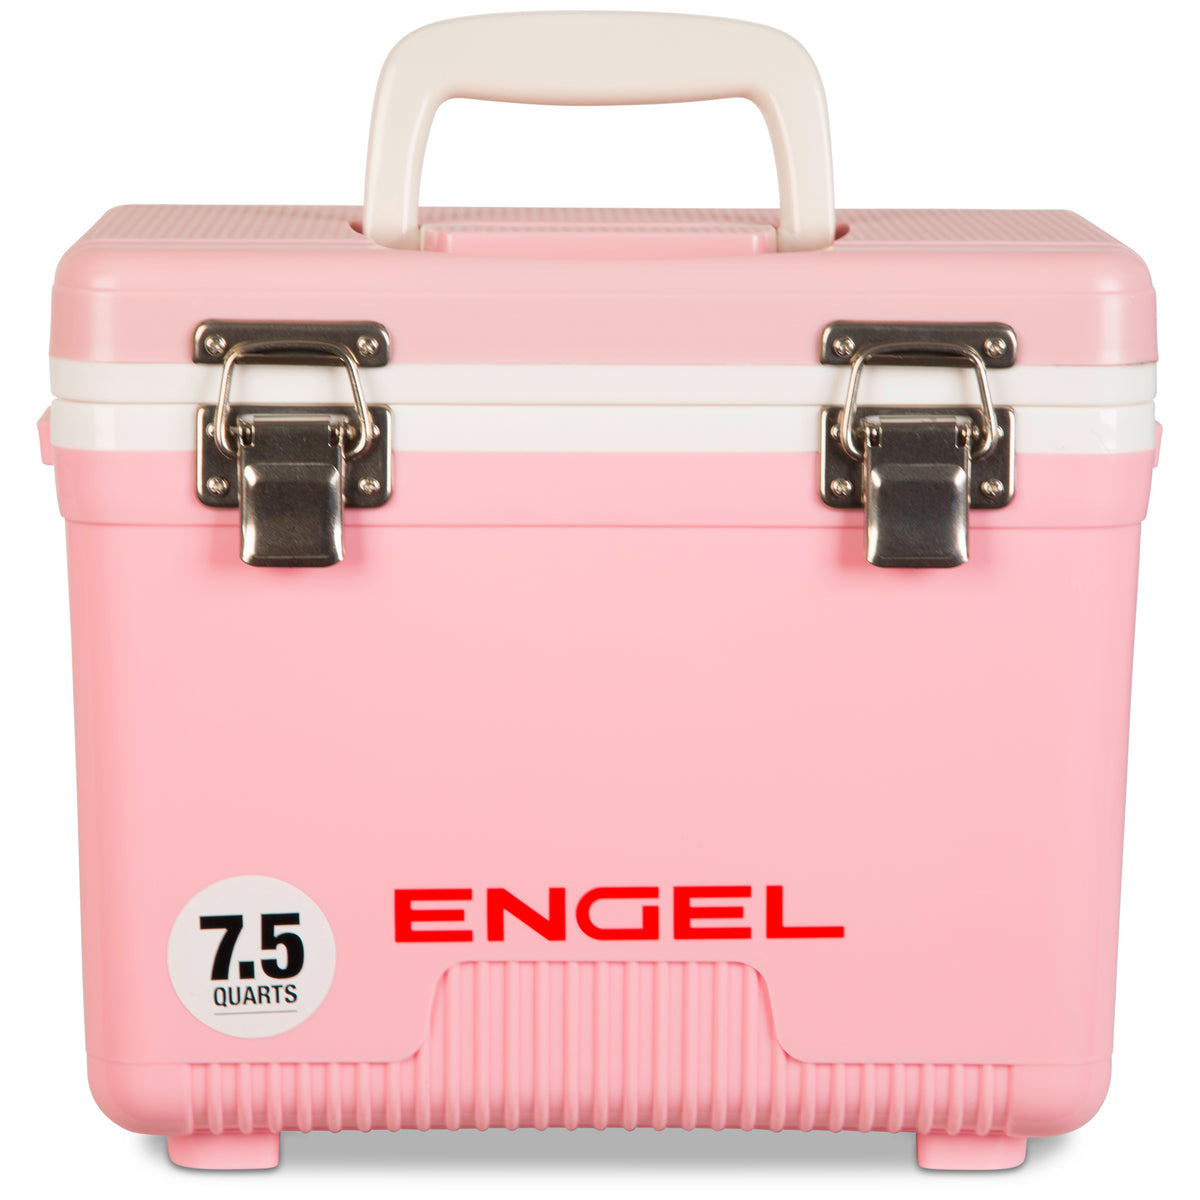 Engel 7.5 Quart Drybox/Cooler - Pink